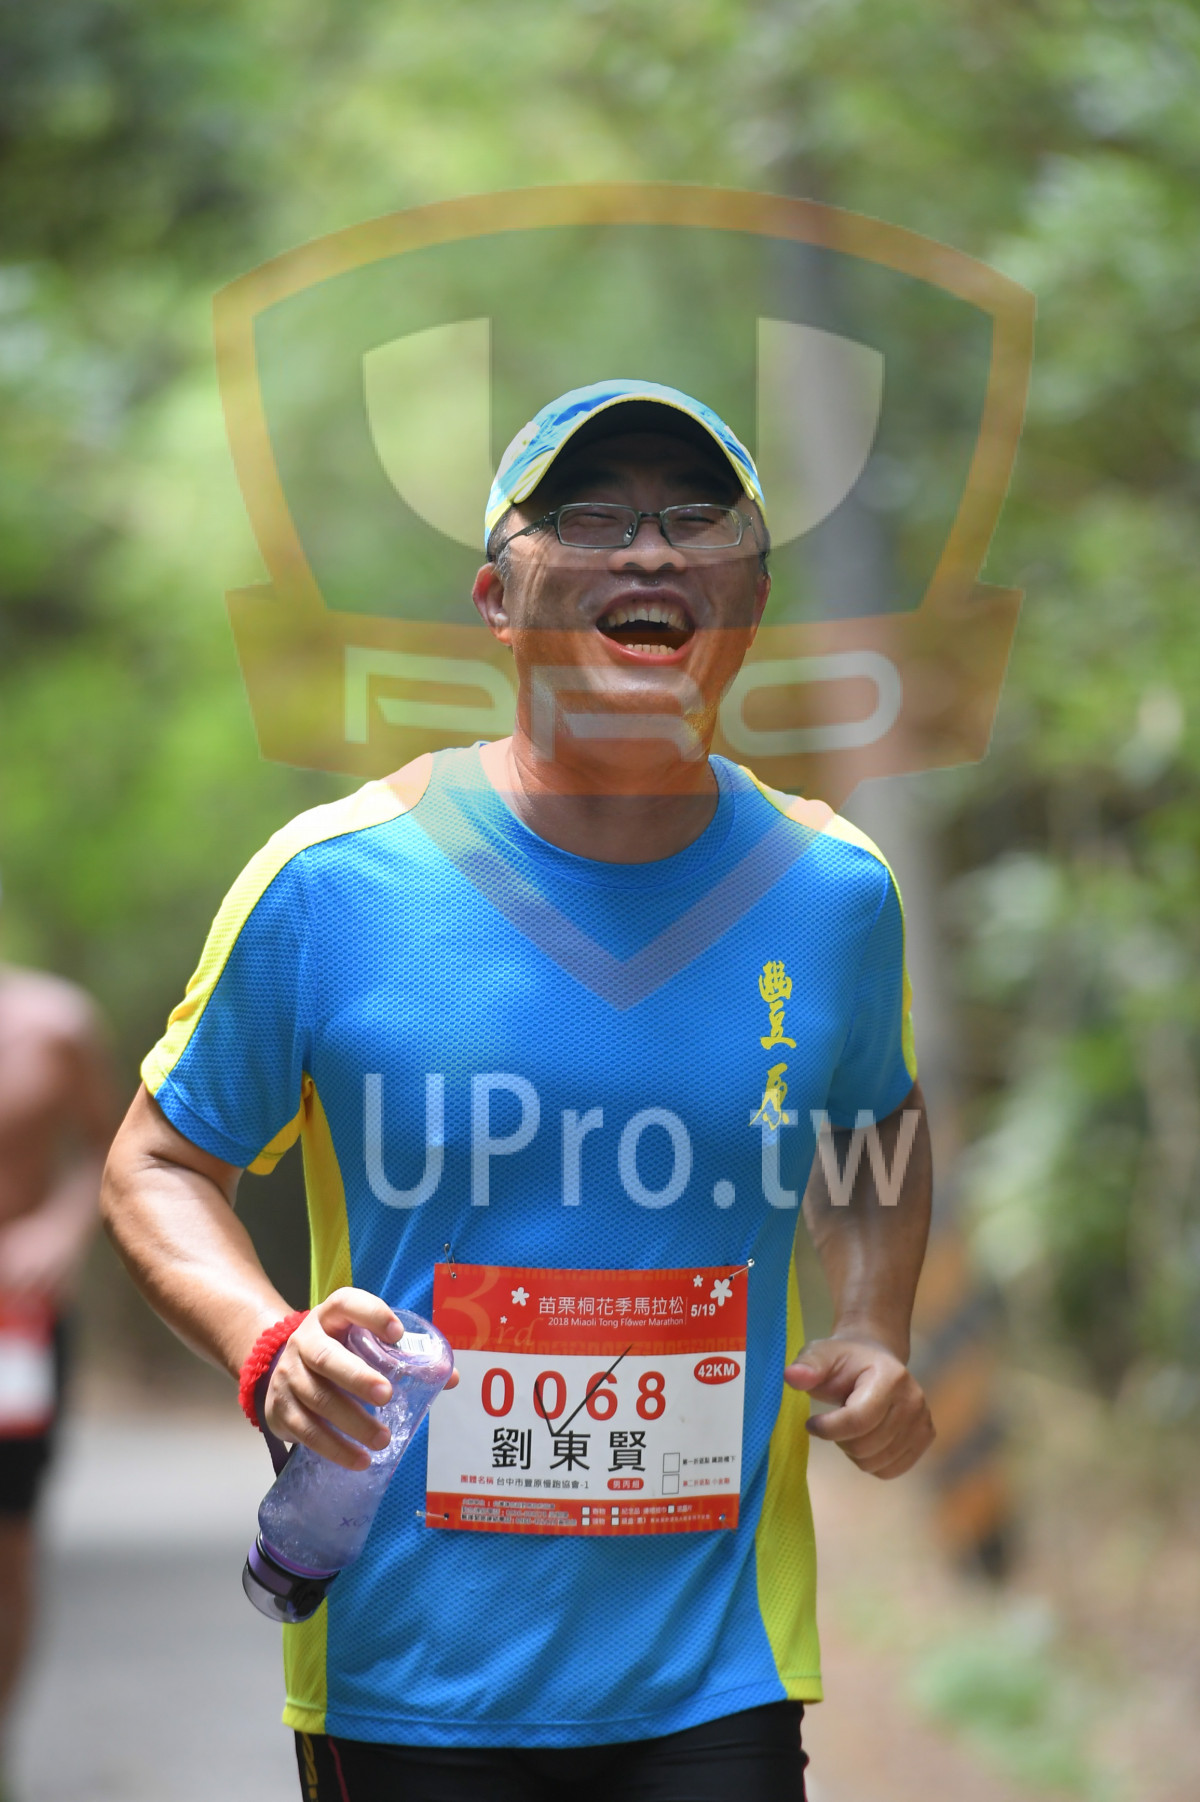 ,*5/19,2018 Miaali Tong Fidwer Marathon,42KM,006 8,,,an|綠色隧道5|中年人